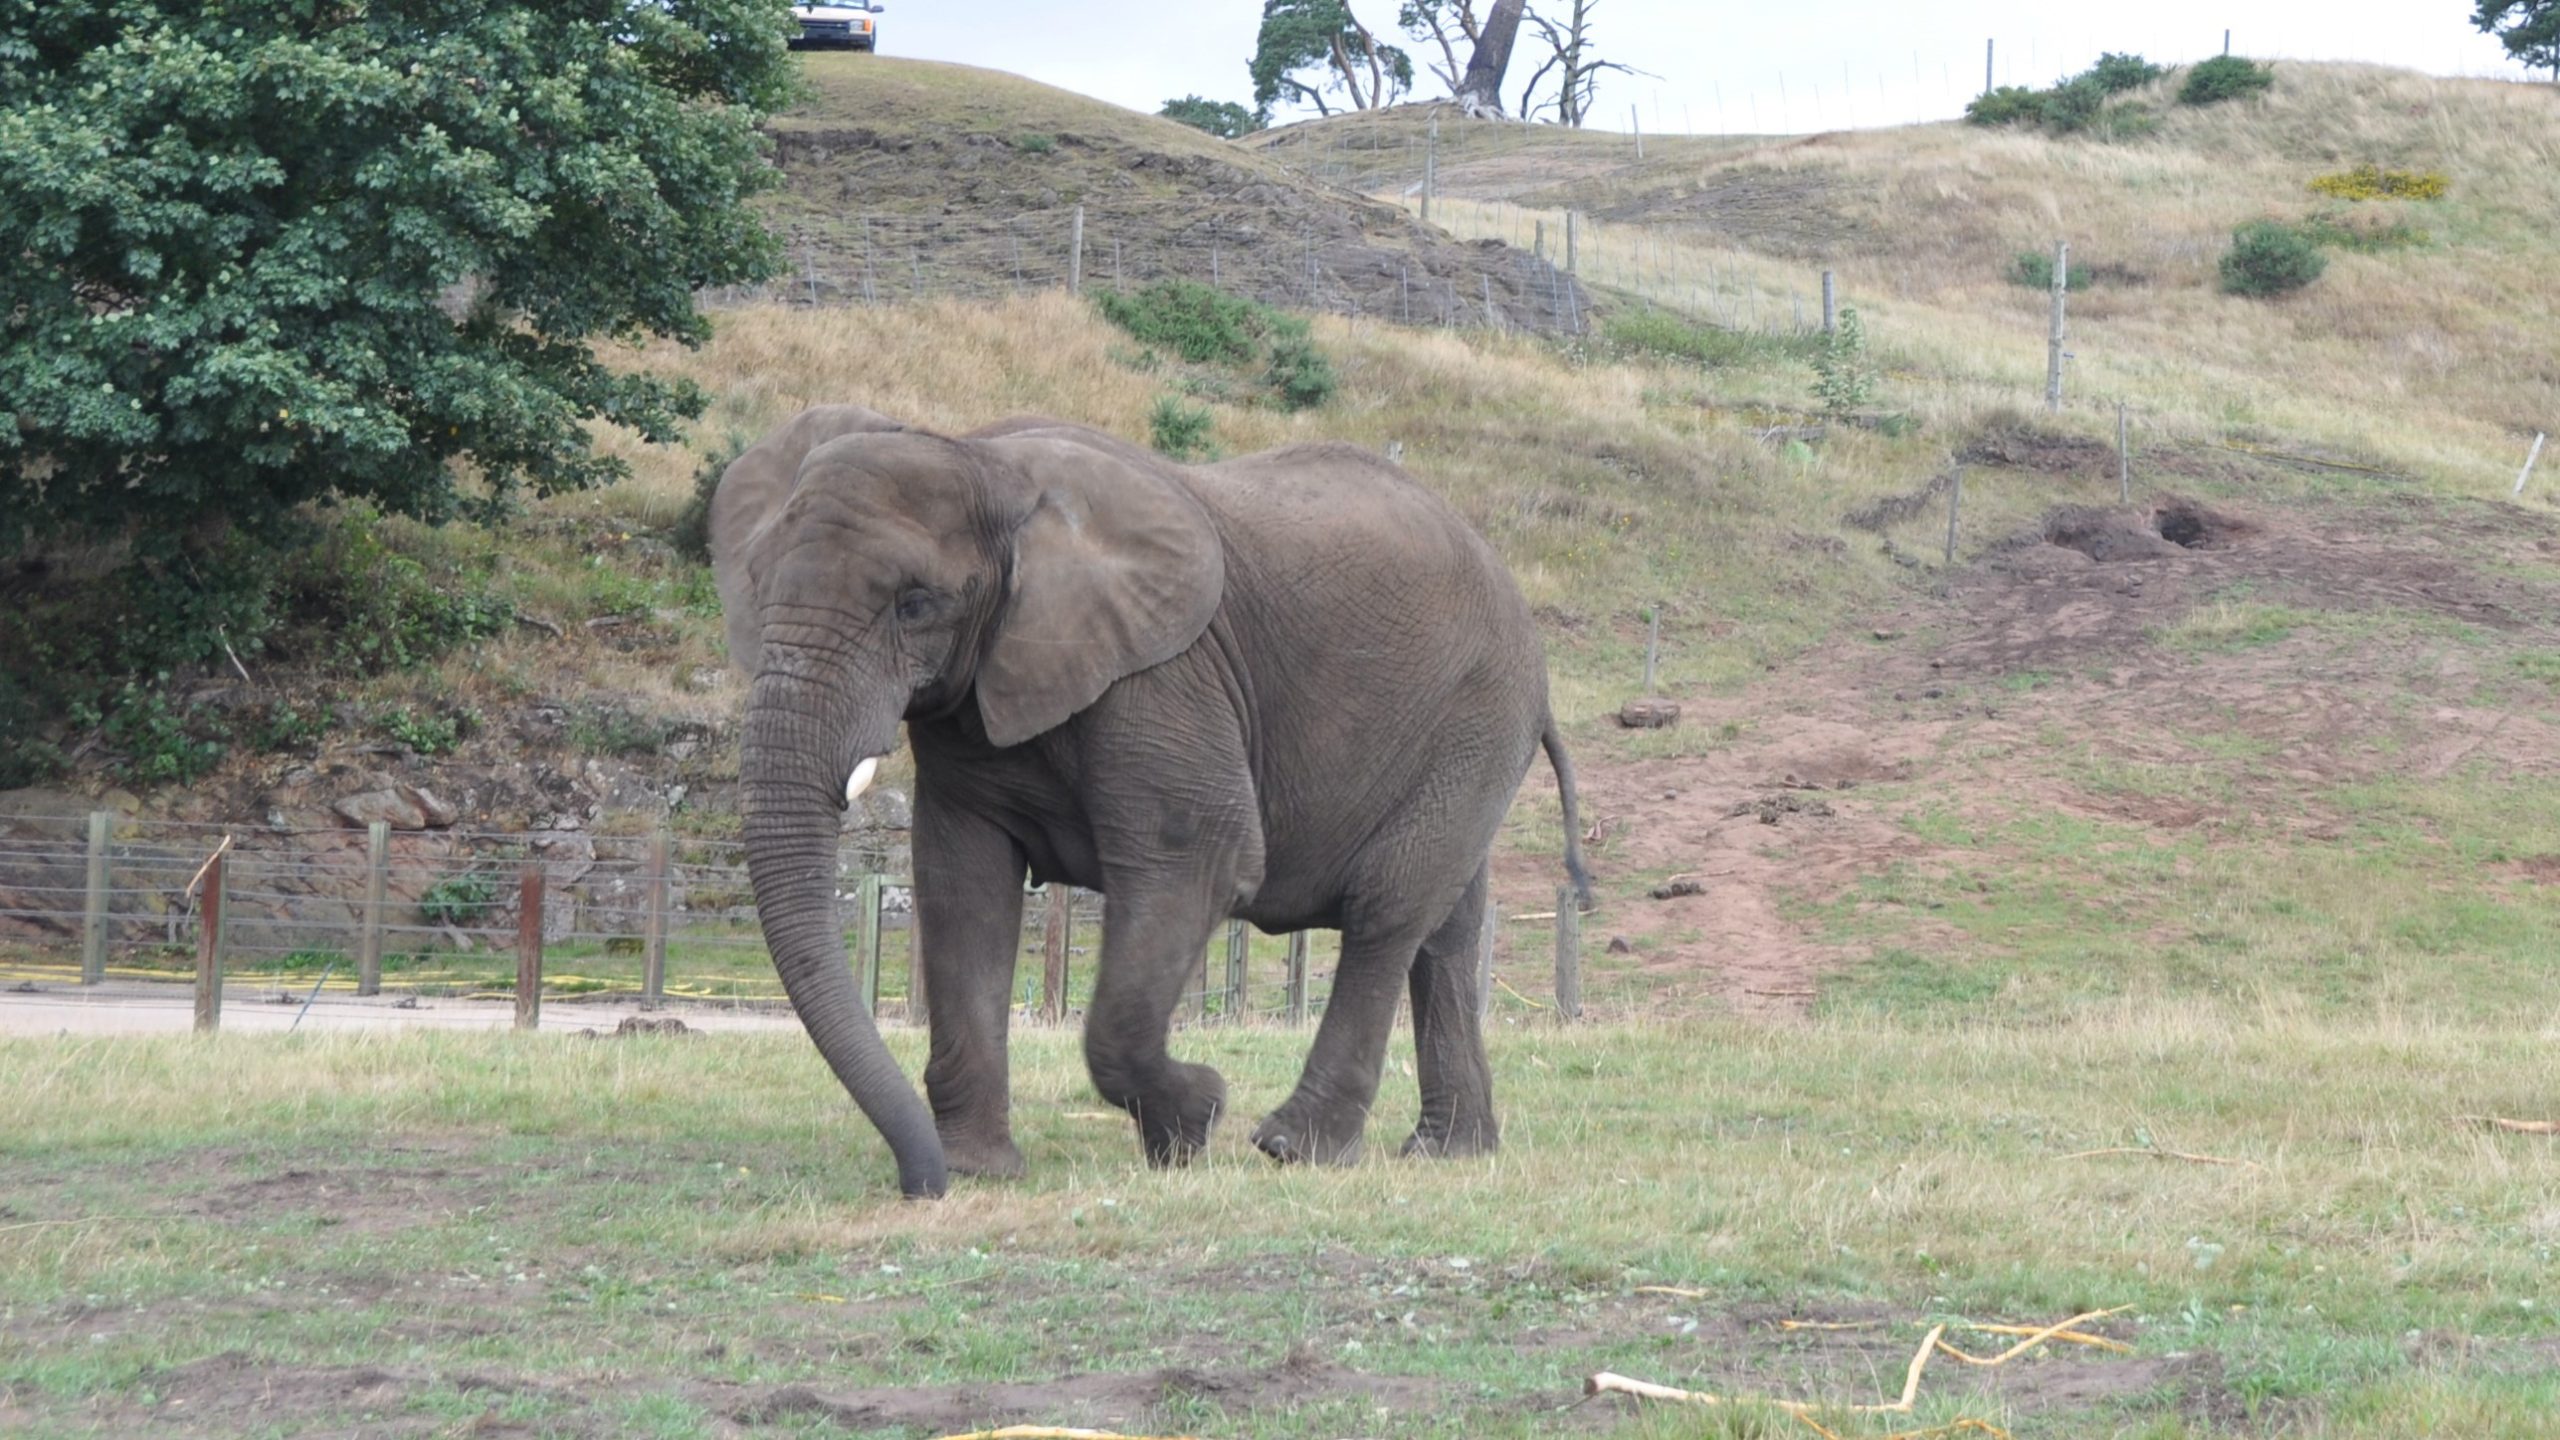 Five the elephant, stood alone at West Midlands Safari Park